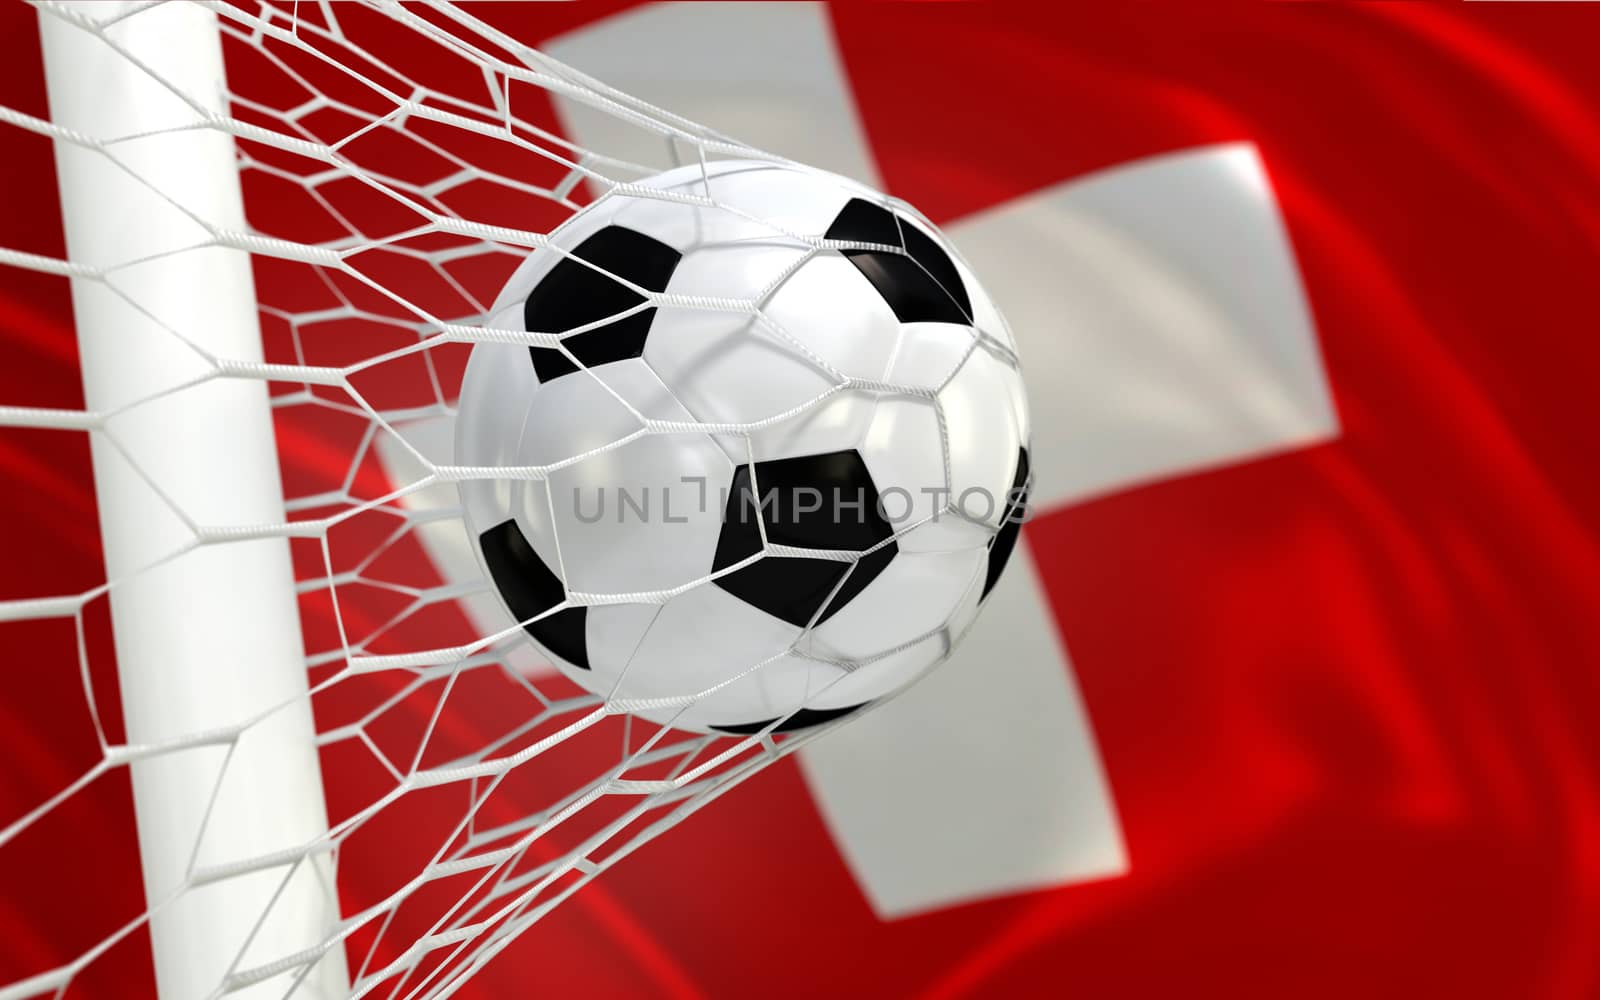 Switzerland waving flag and soccer ball in goal net by Barbraford